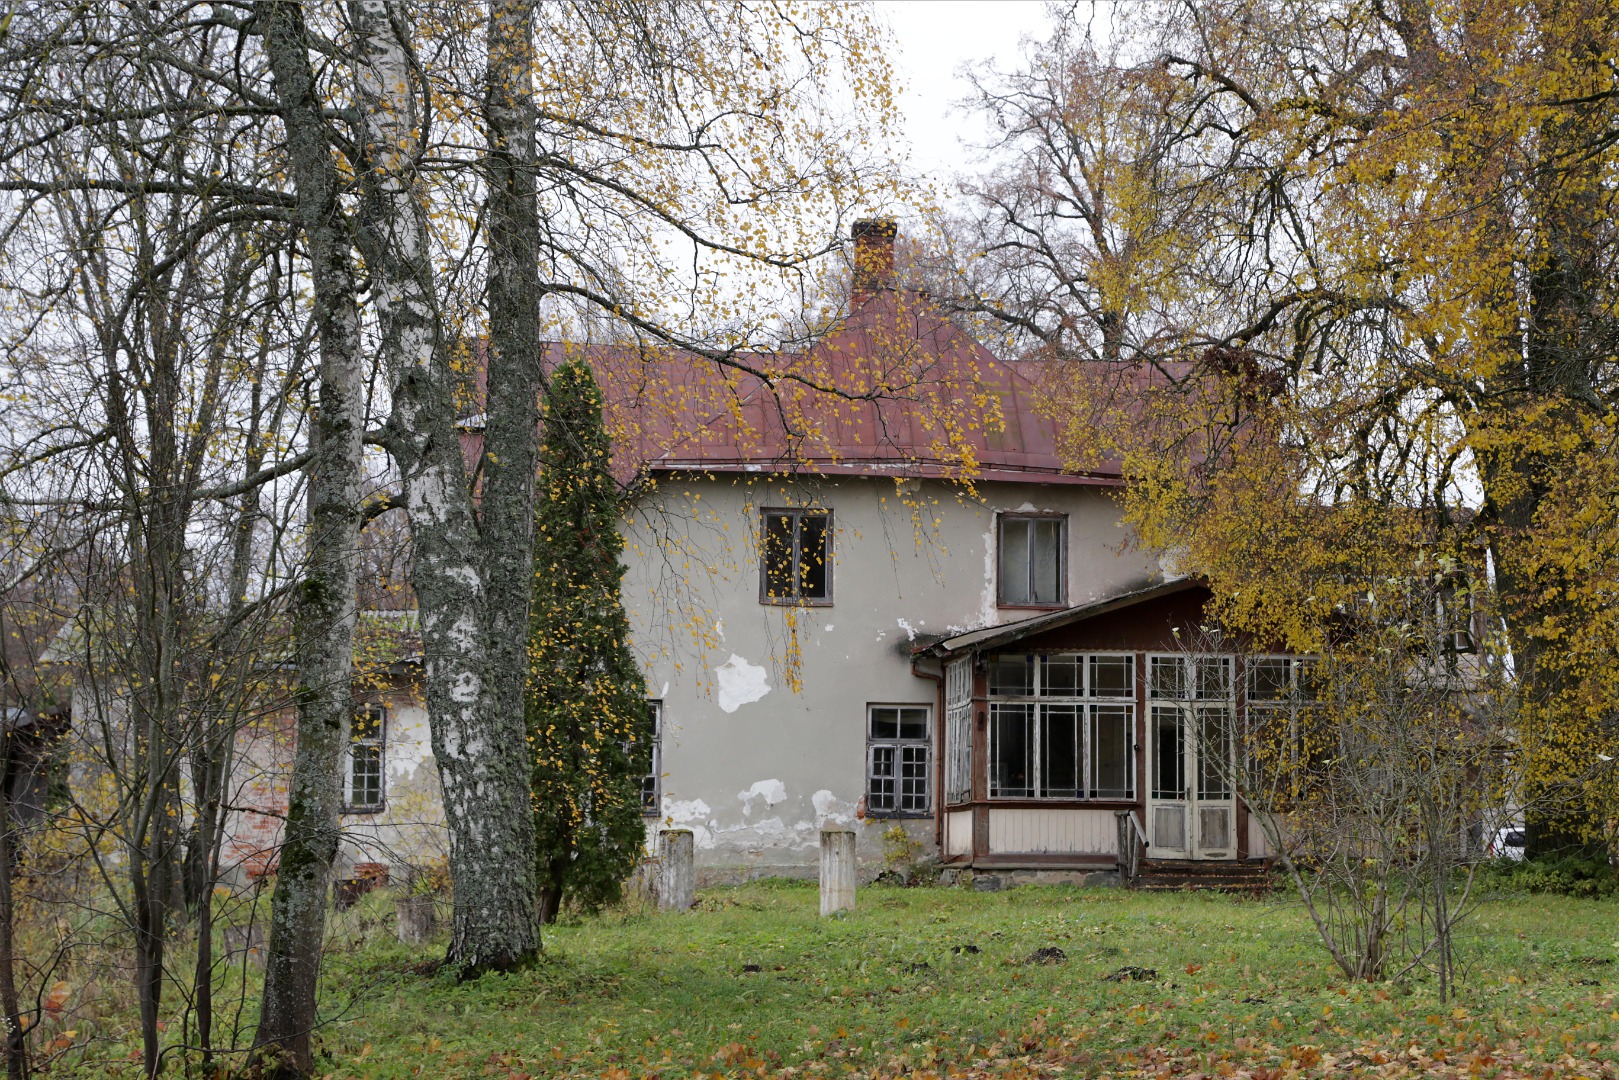 Main building of Jõgeva Manor. 1969 rephoto